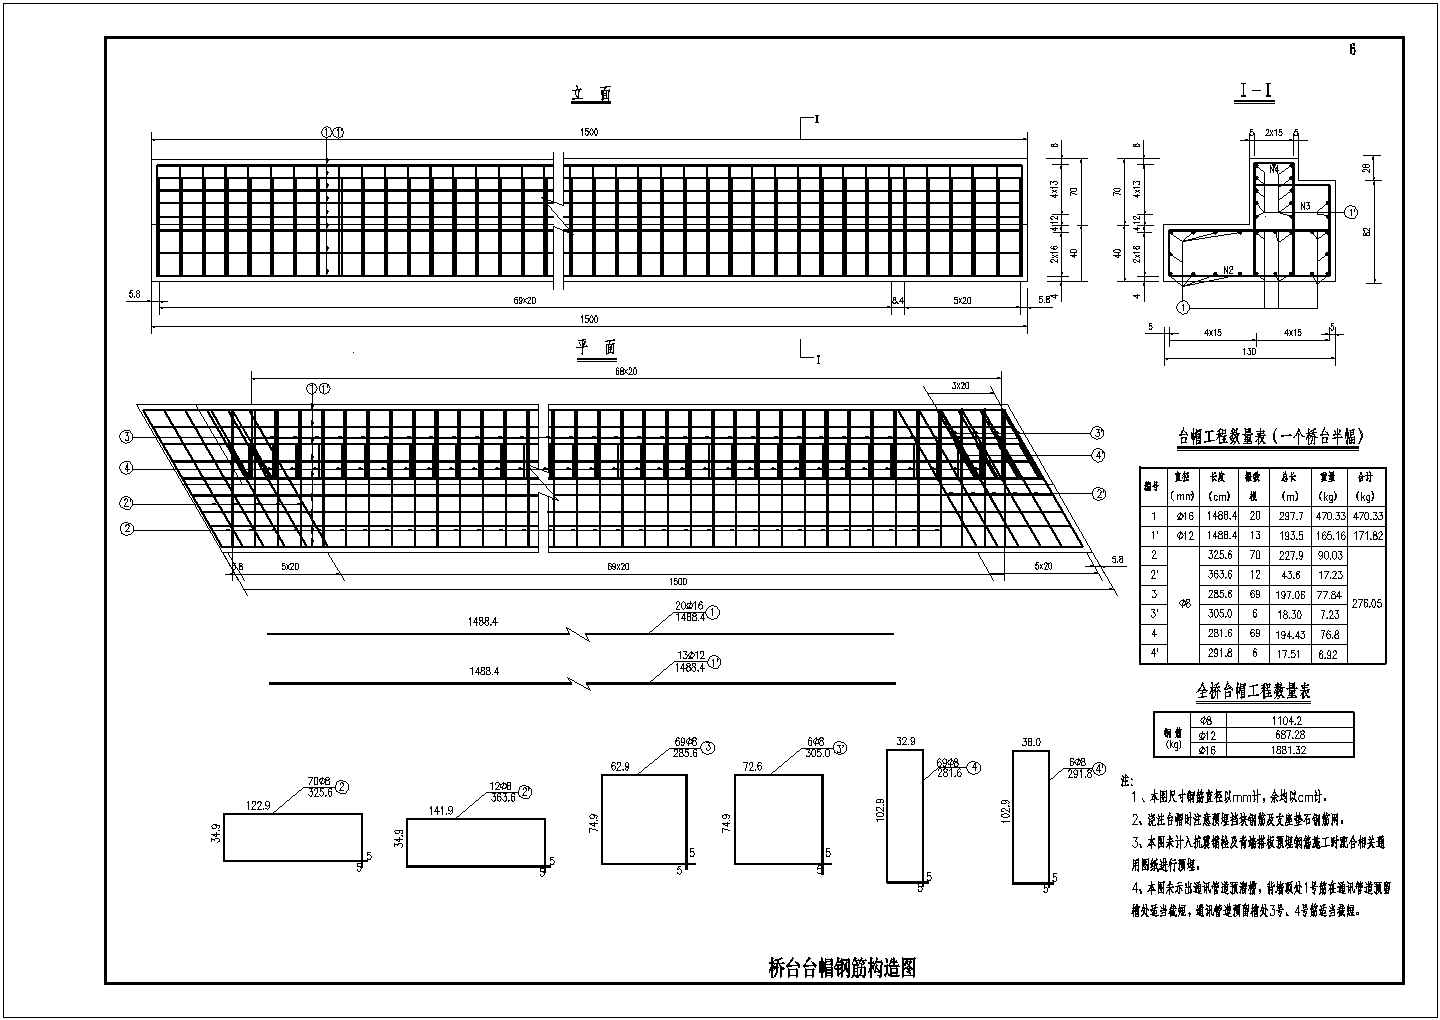 1-10m钢筋混凝土空心板成套cad设计图纸